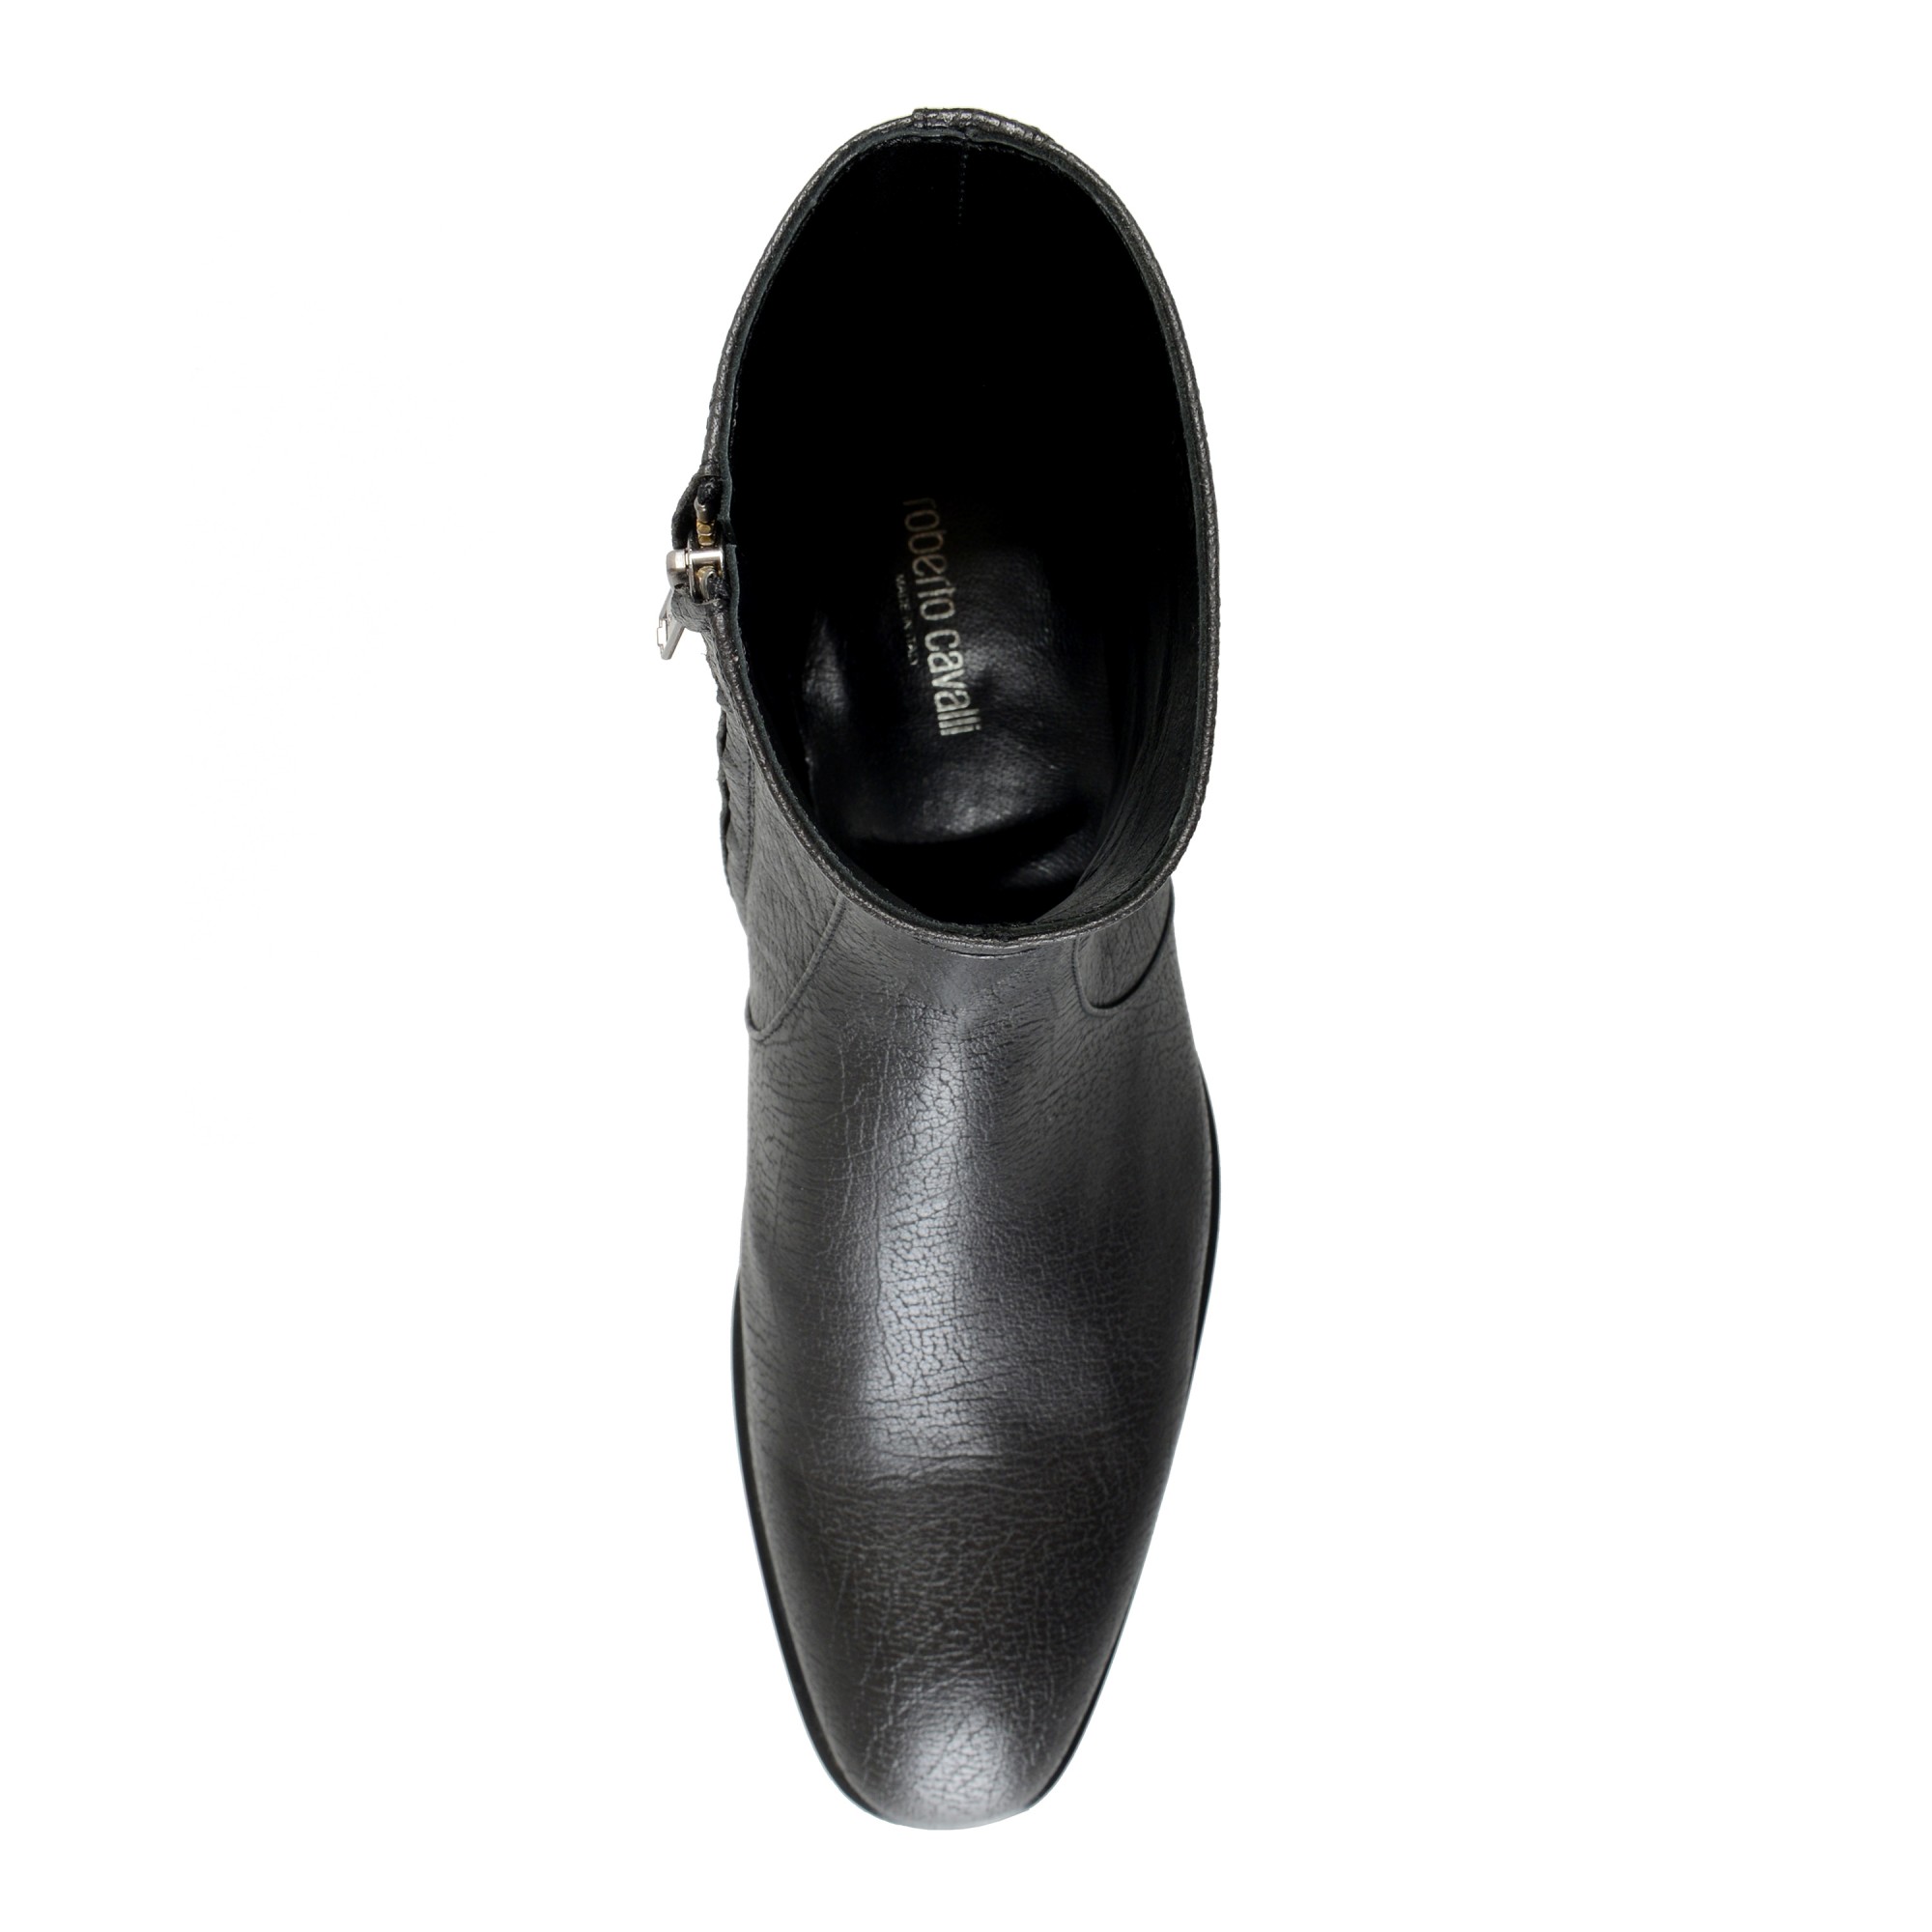 Just Cavalli Men's Black Leather Ankle Boots shoes Alligator Strap 9 US 11 